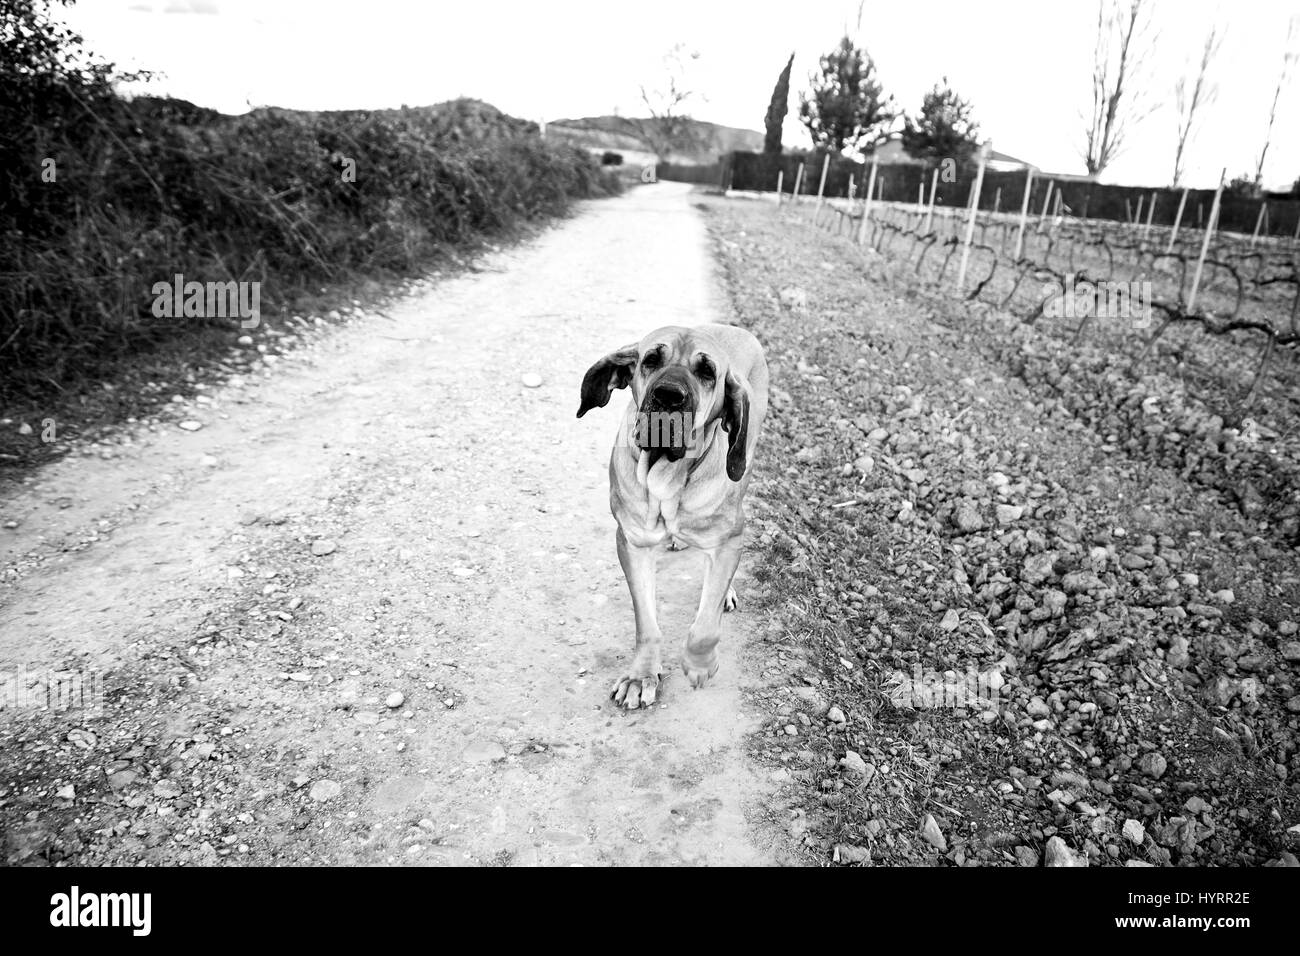 Dog breed fila brasileiro Black and White Stock Photos & Images - Alamy